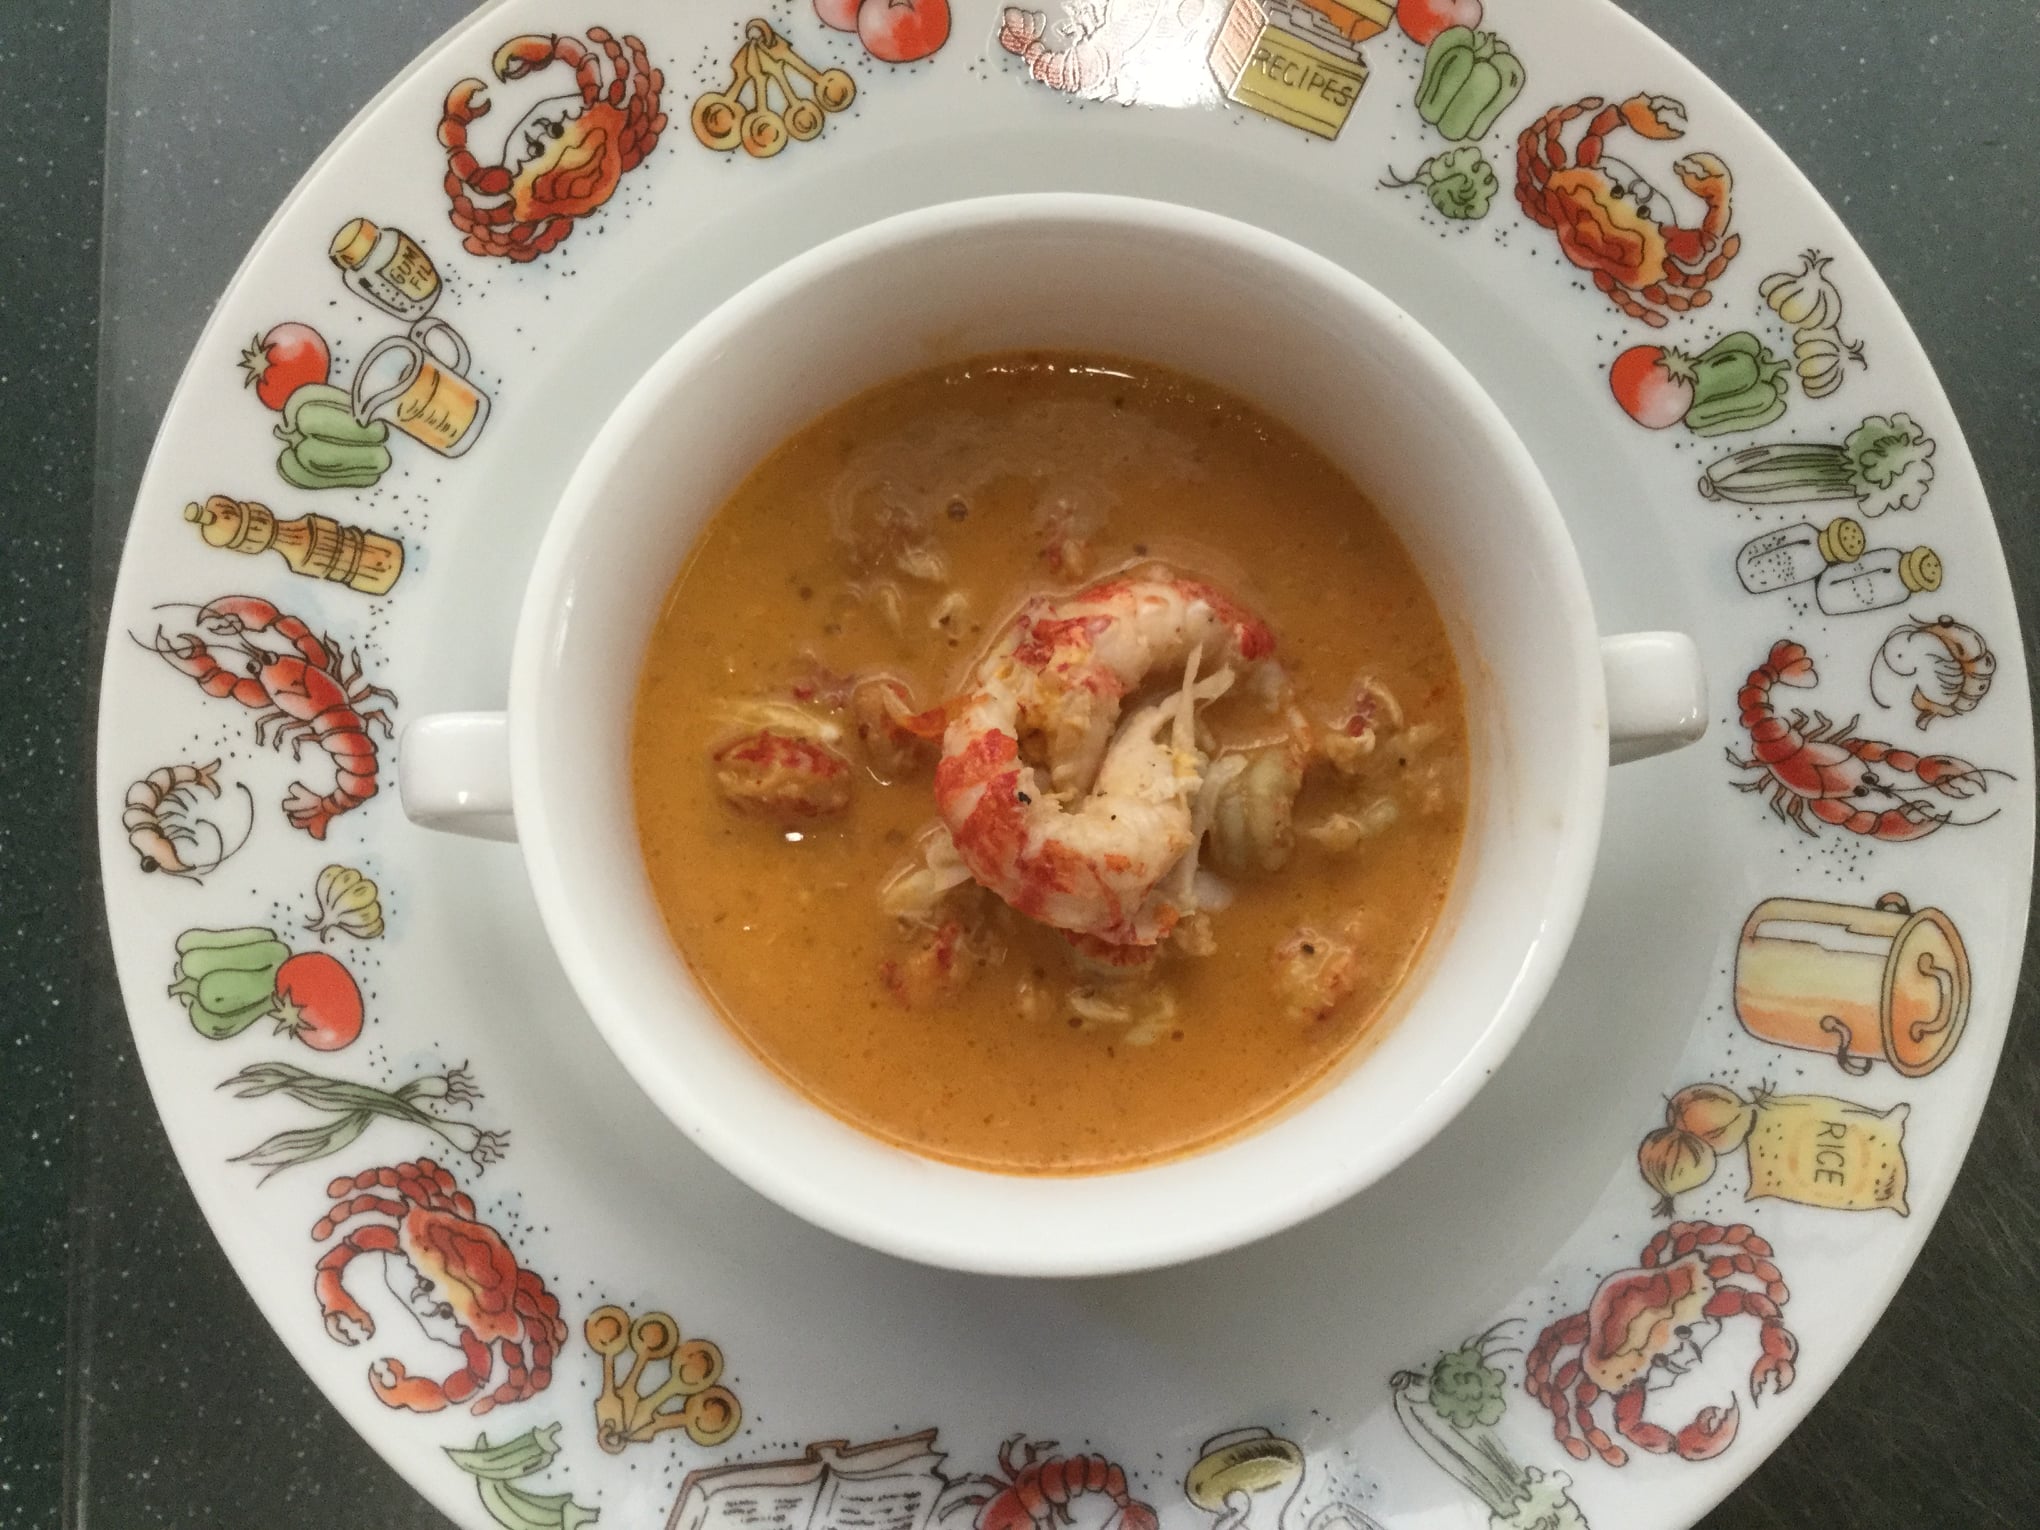 Creamy Crawfish and Lump Crabmeat Soup